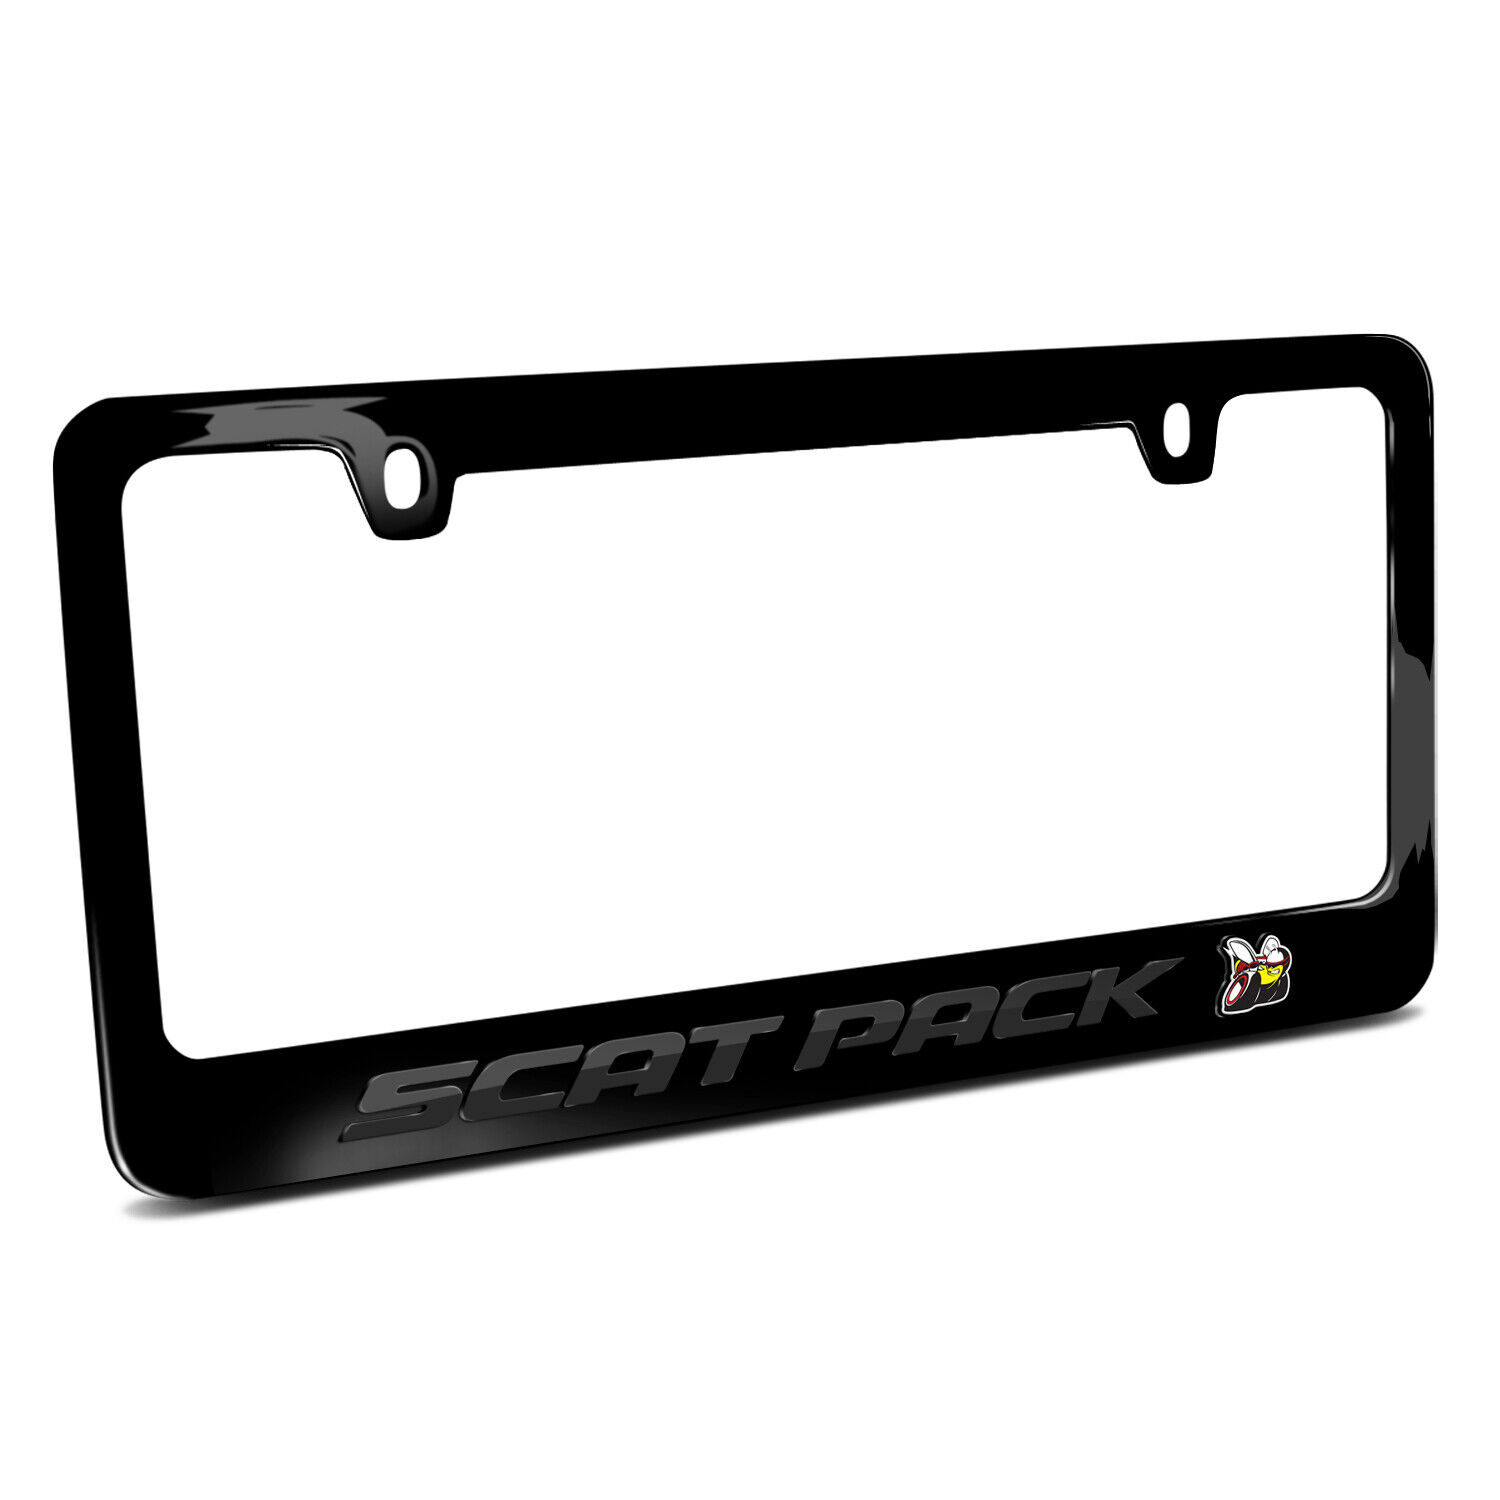 Dodge Scat-Pack in 3D Dark Gray Letters on Black Metal License Plate Frame